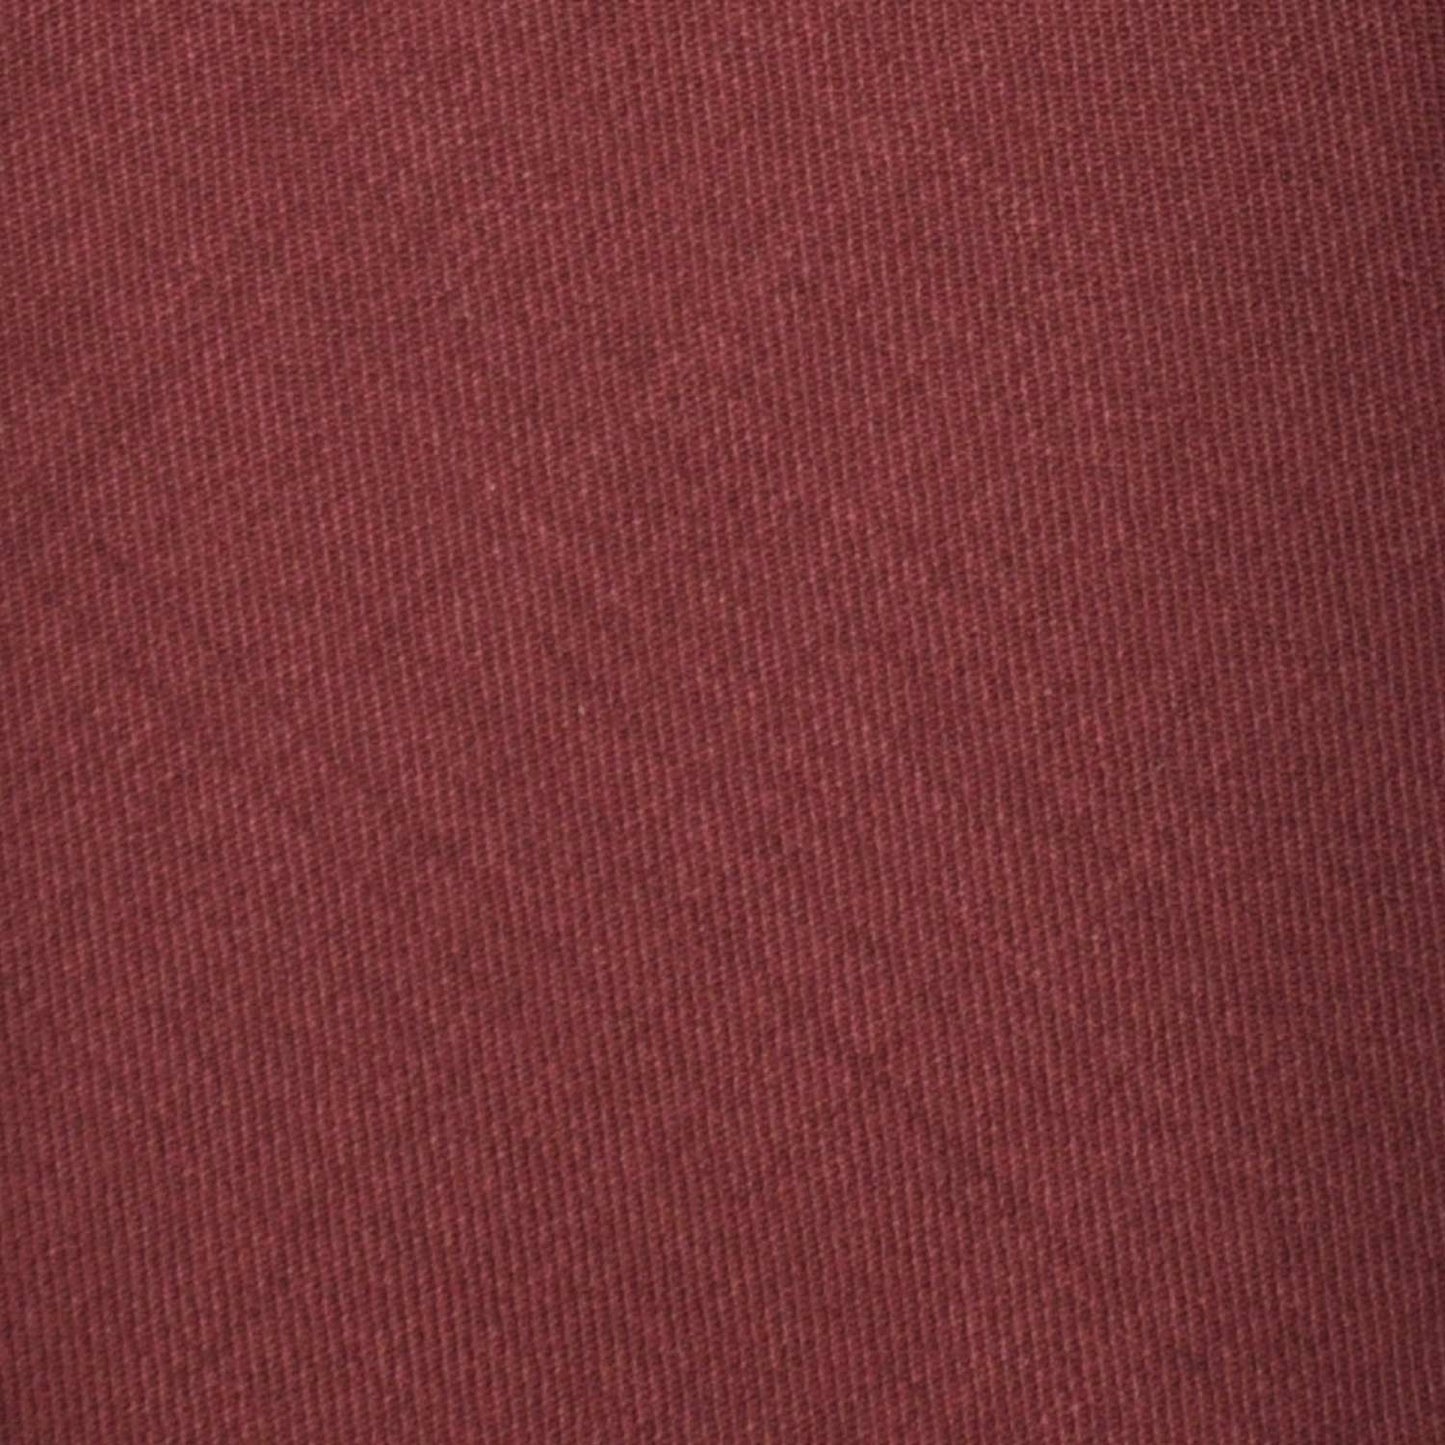 Burgundy Red Plain Tie Holland&Sherry Wool